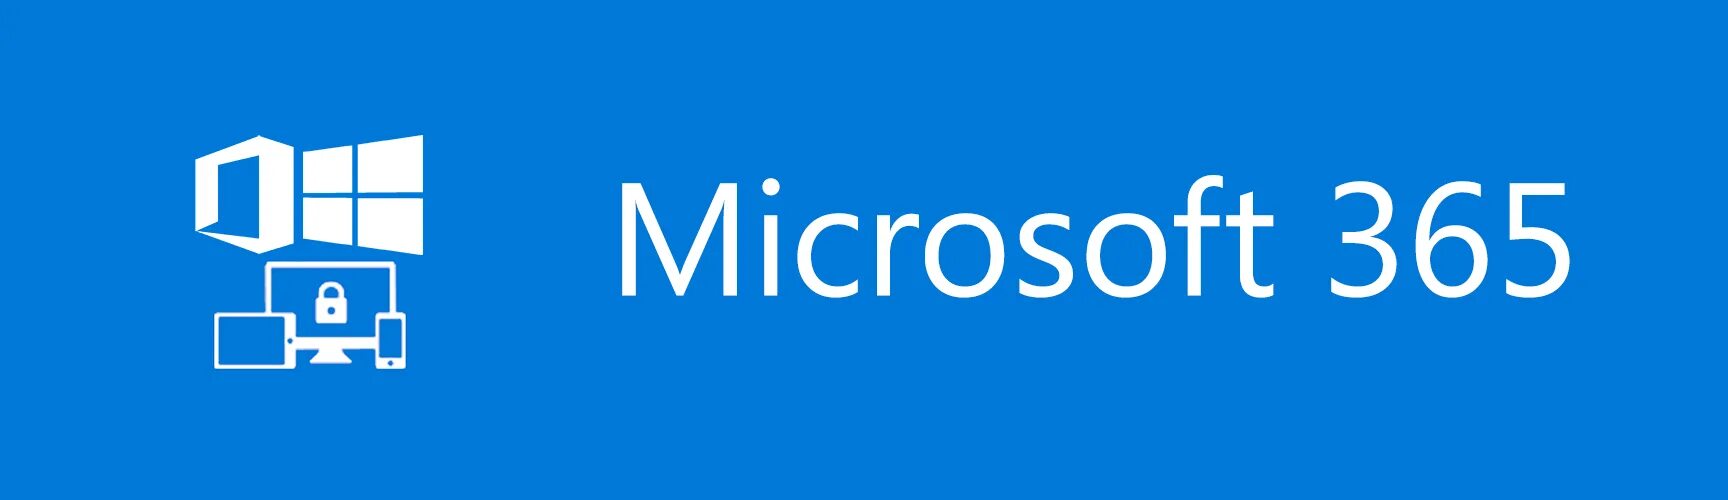 MS 365. Последняя версия Microsoft 365. Логотип Майкрософт 365. Maekrosovt 365.